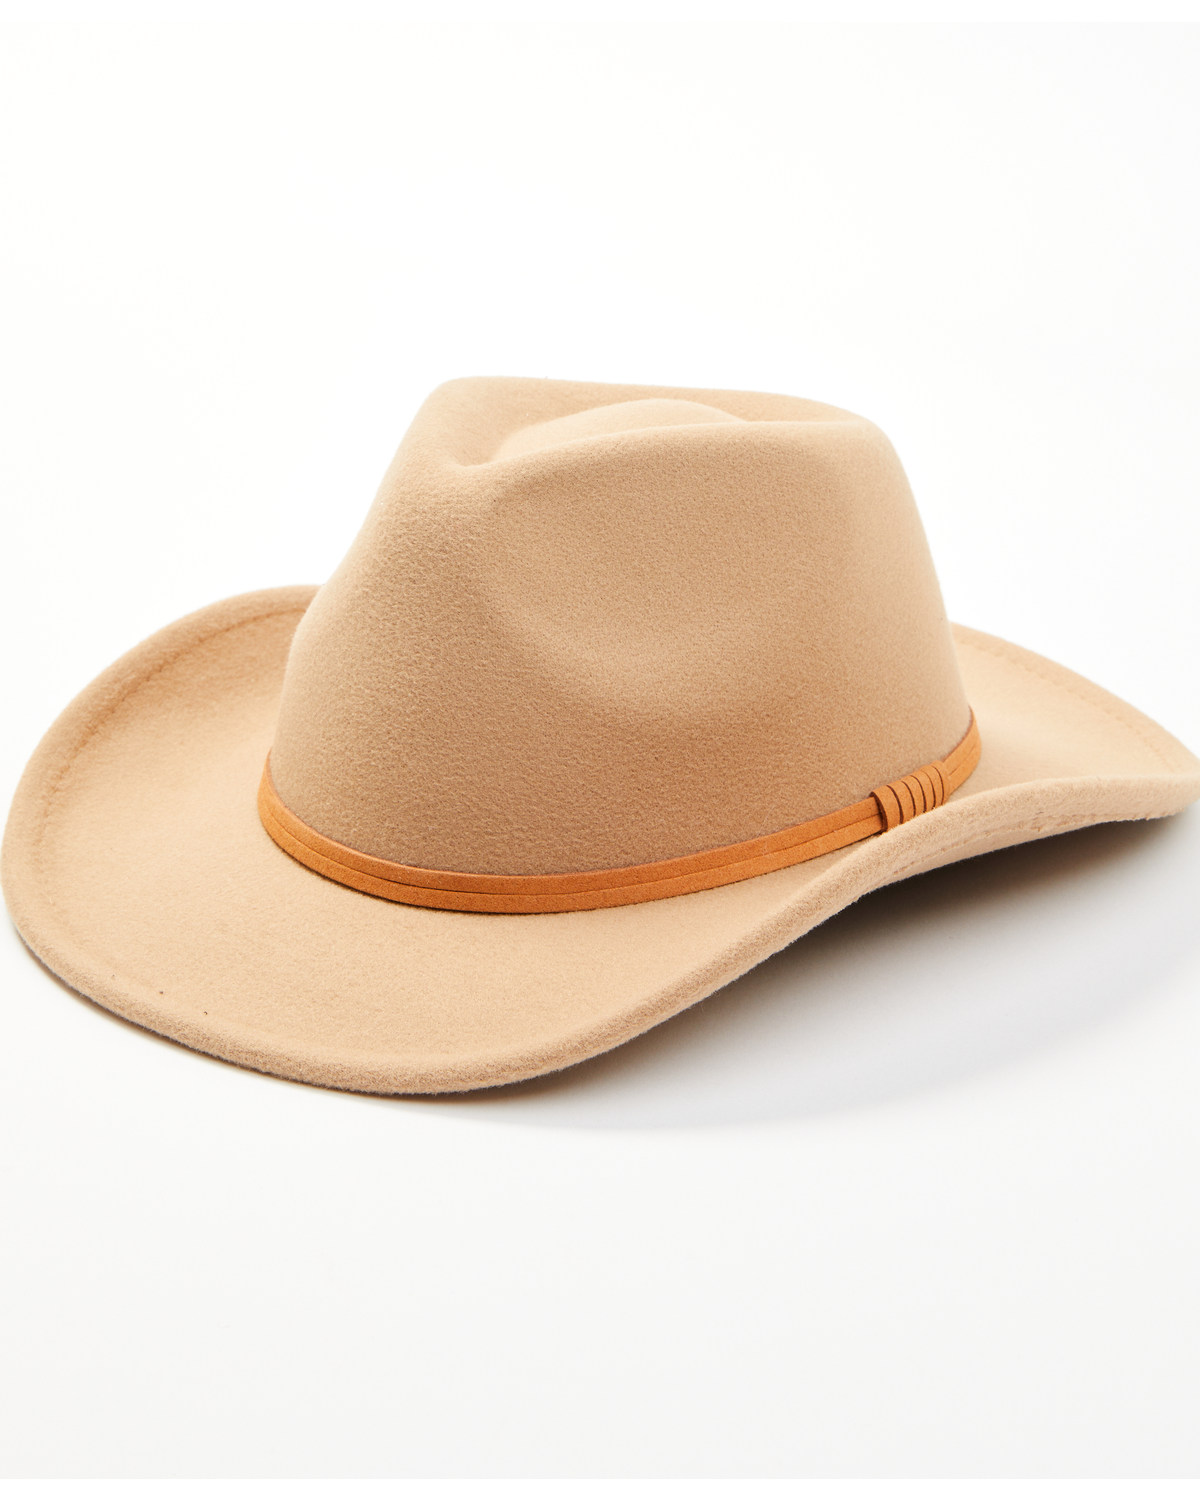 Cody James Kids' Buckskin Felt Cowboy Hat